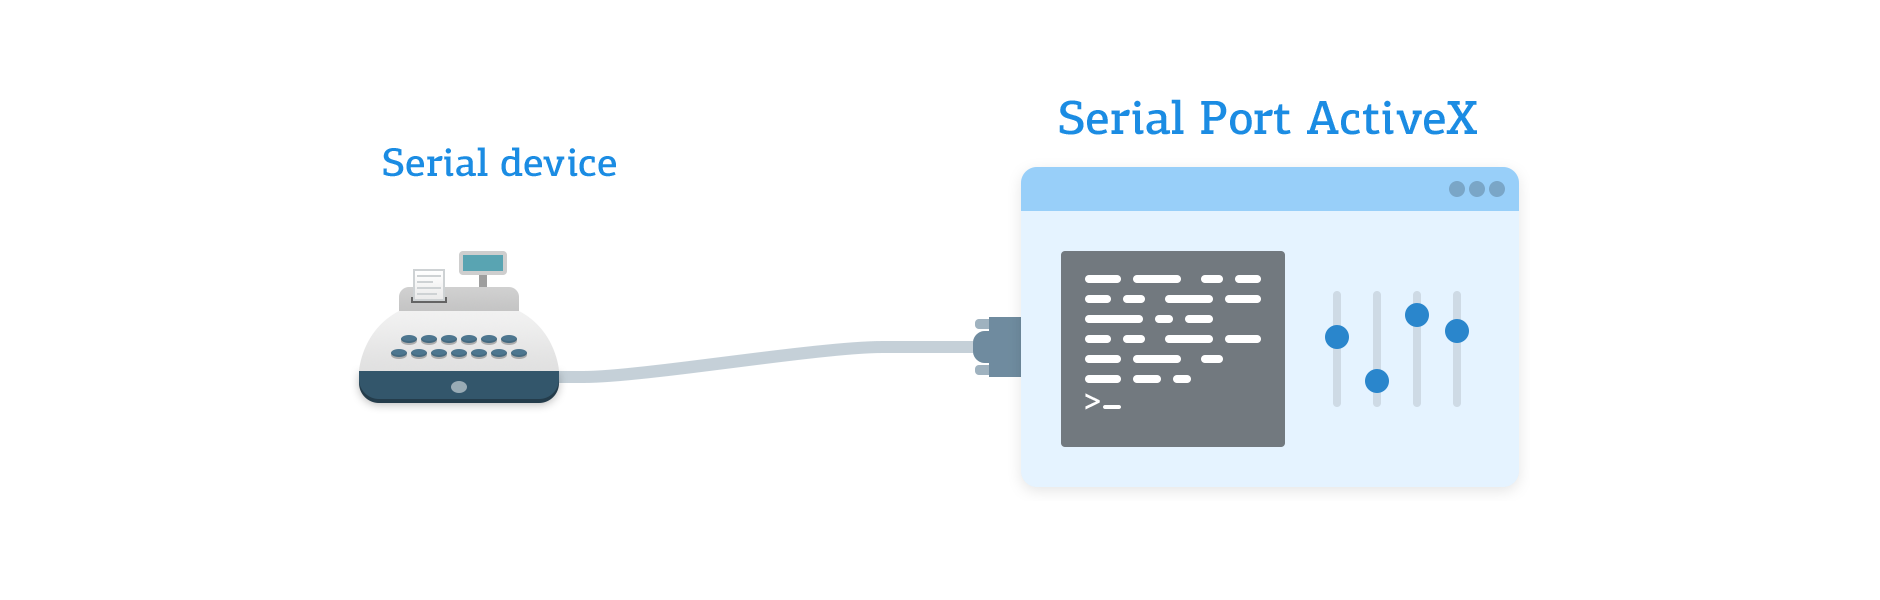 Serial port delphi 7 components of communication